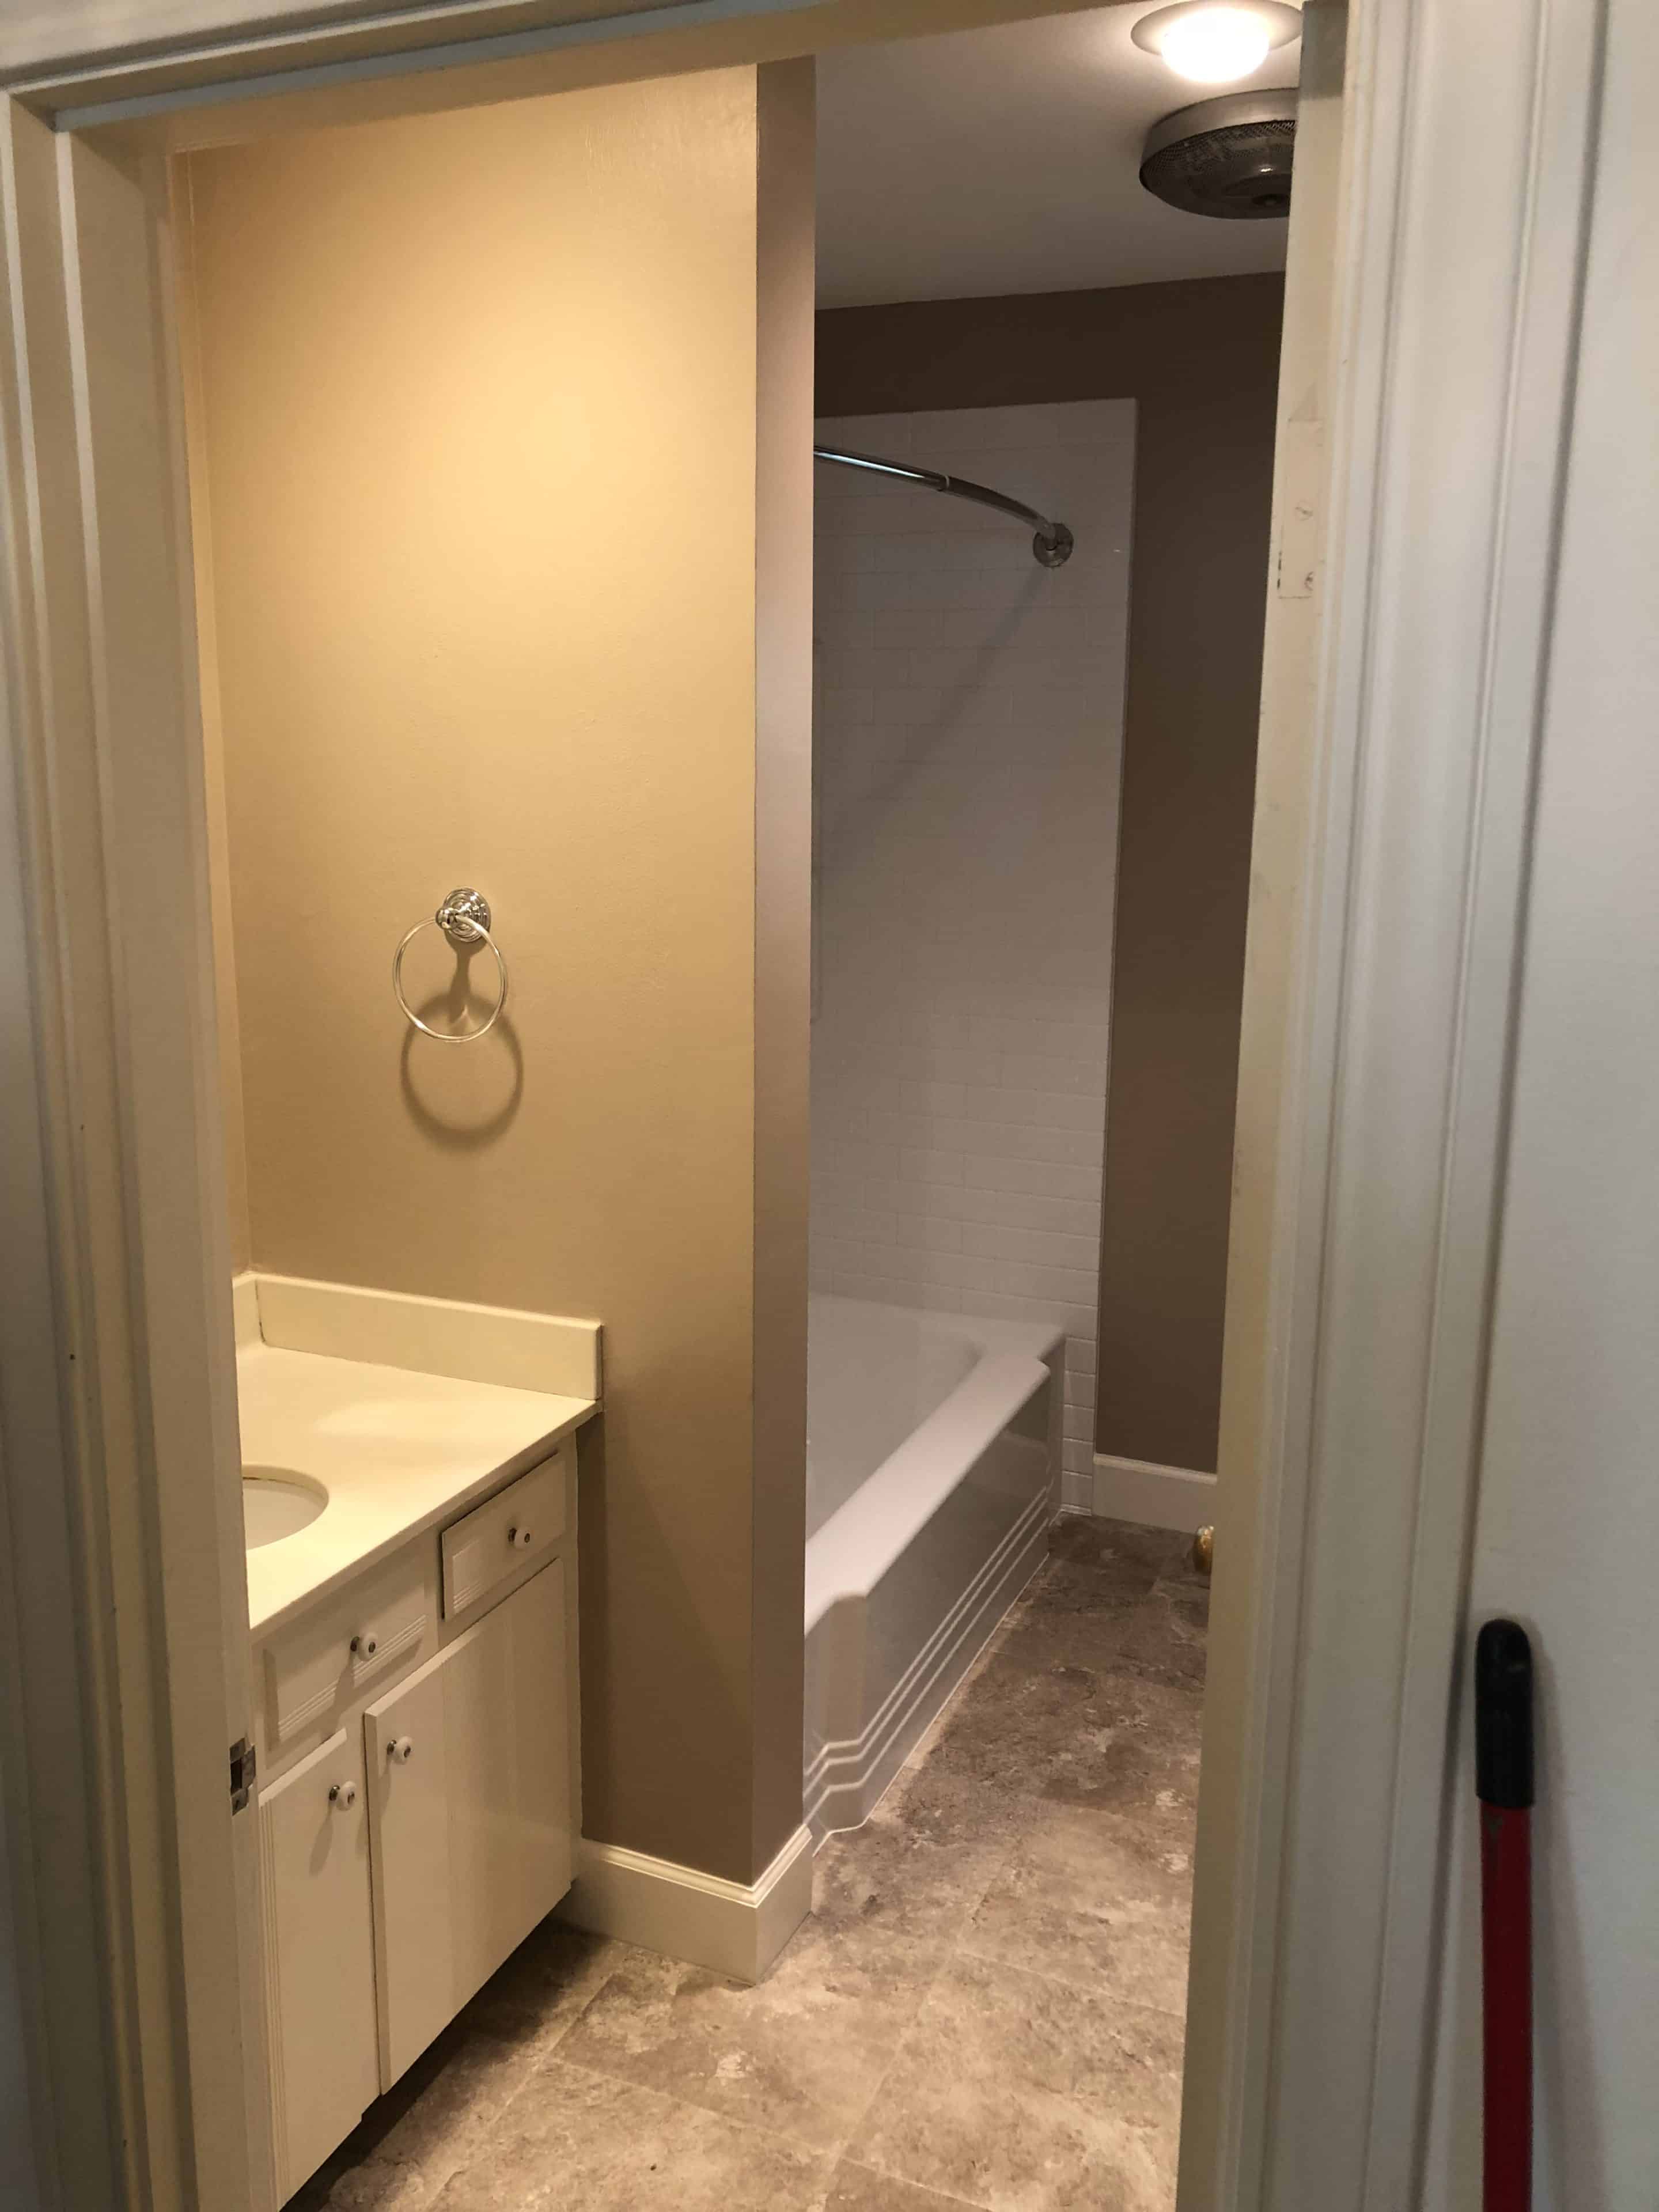 Lockney Bathroom Remodel Cost